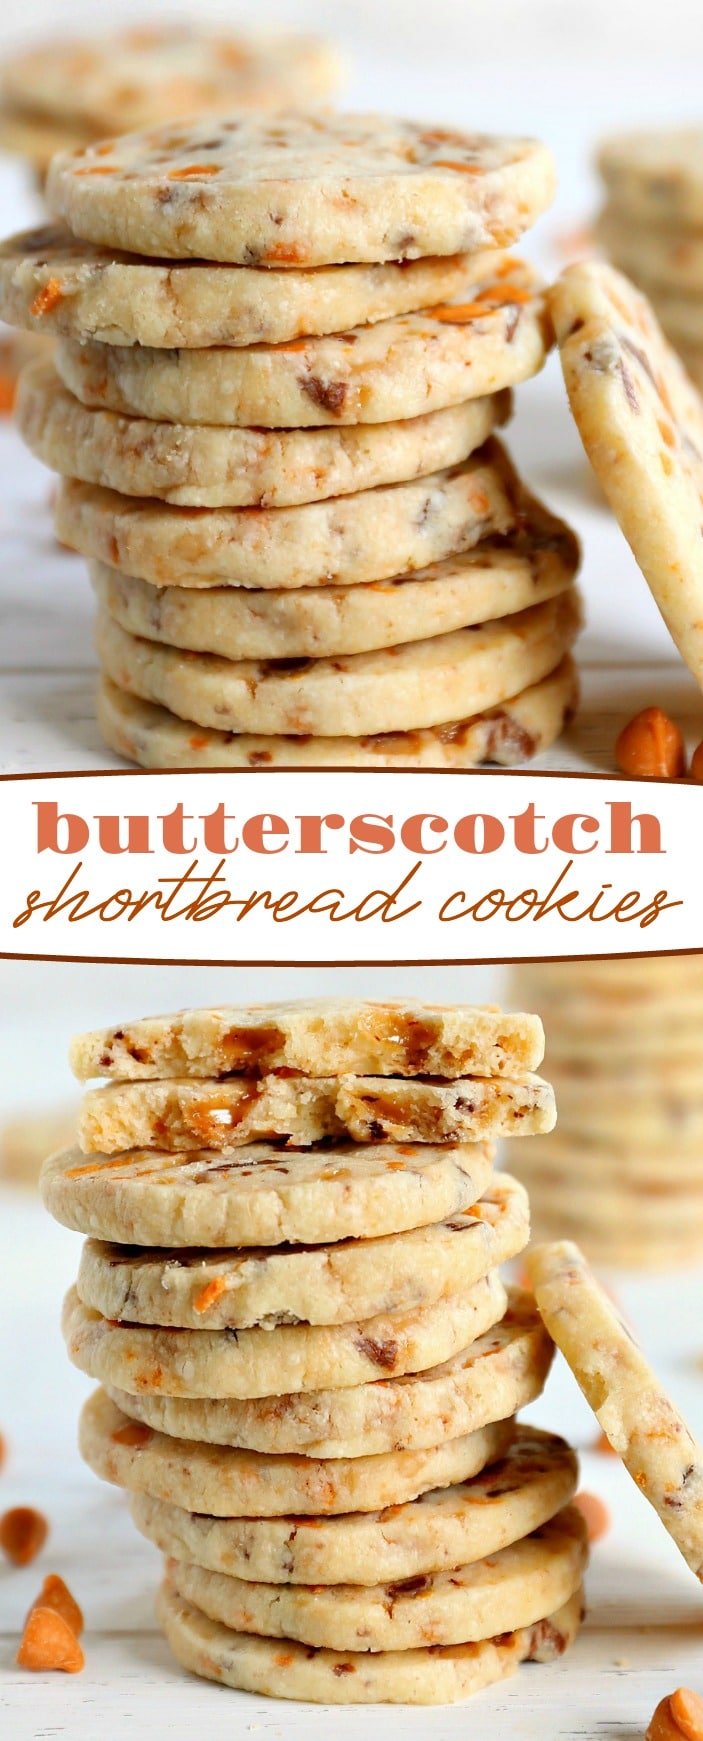 butterscotch-shortbread-cookies-collage